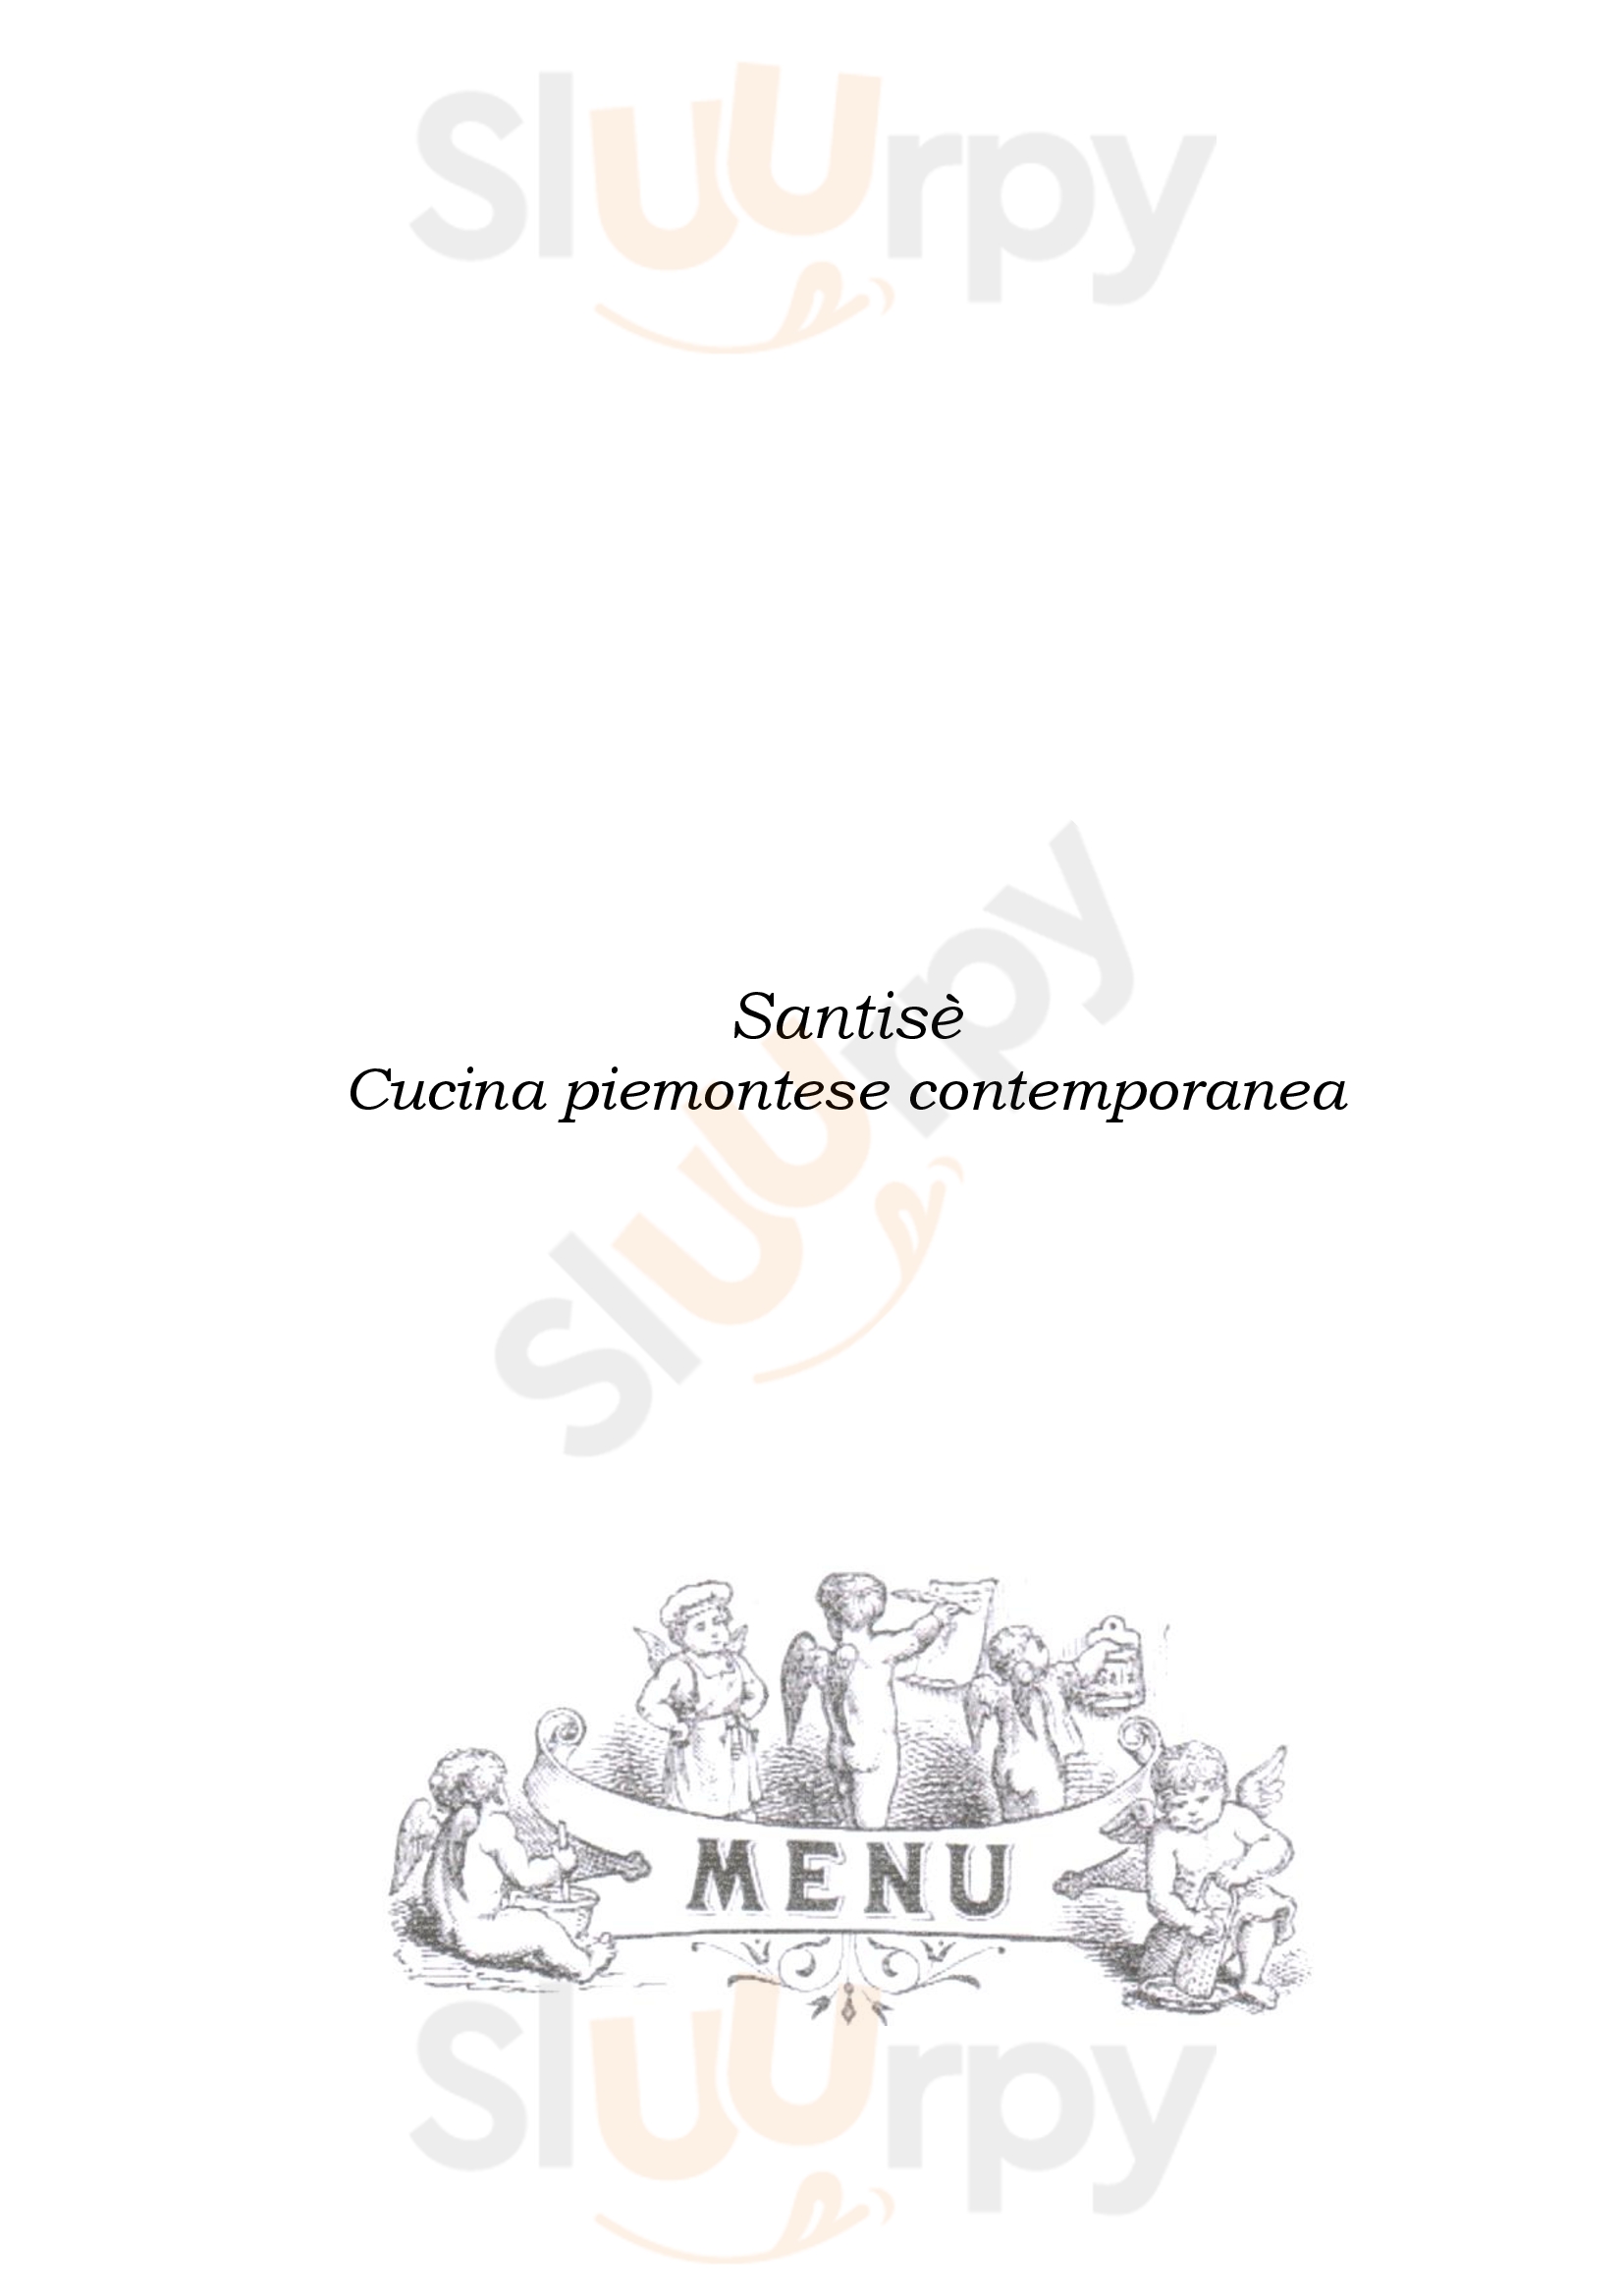 Santise Cucina Piemontese Contemporanea Calliano menù 1 pagina